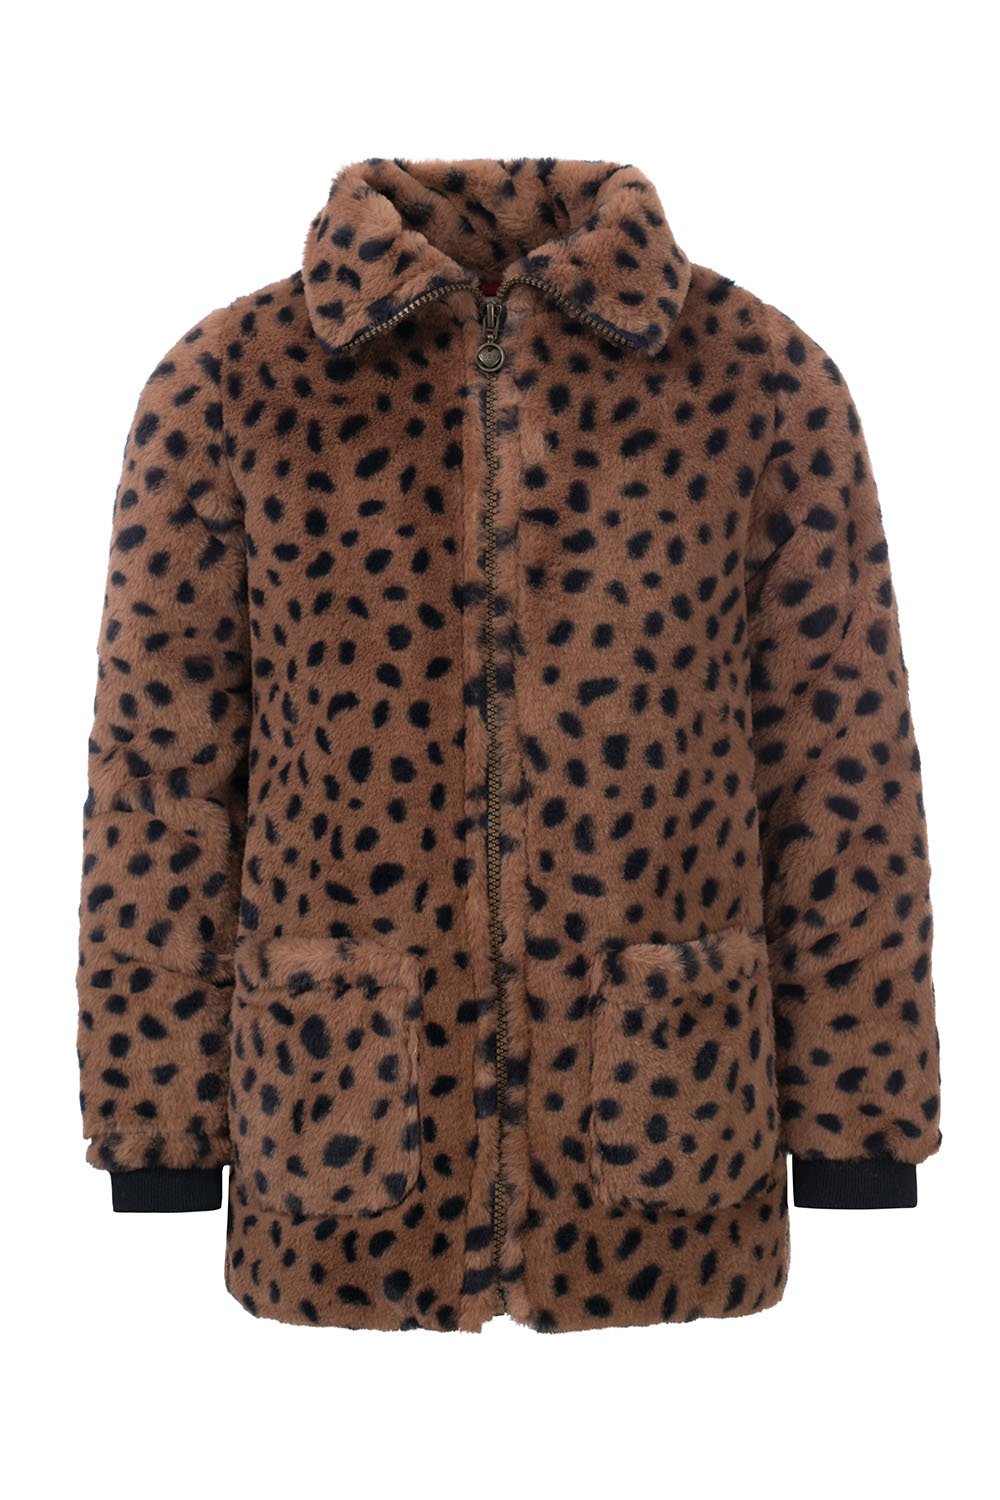 Meisjes Little jacket cheeta fur van LOOXS Little in de kleur cheeta in maat 128.